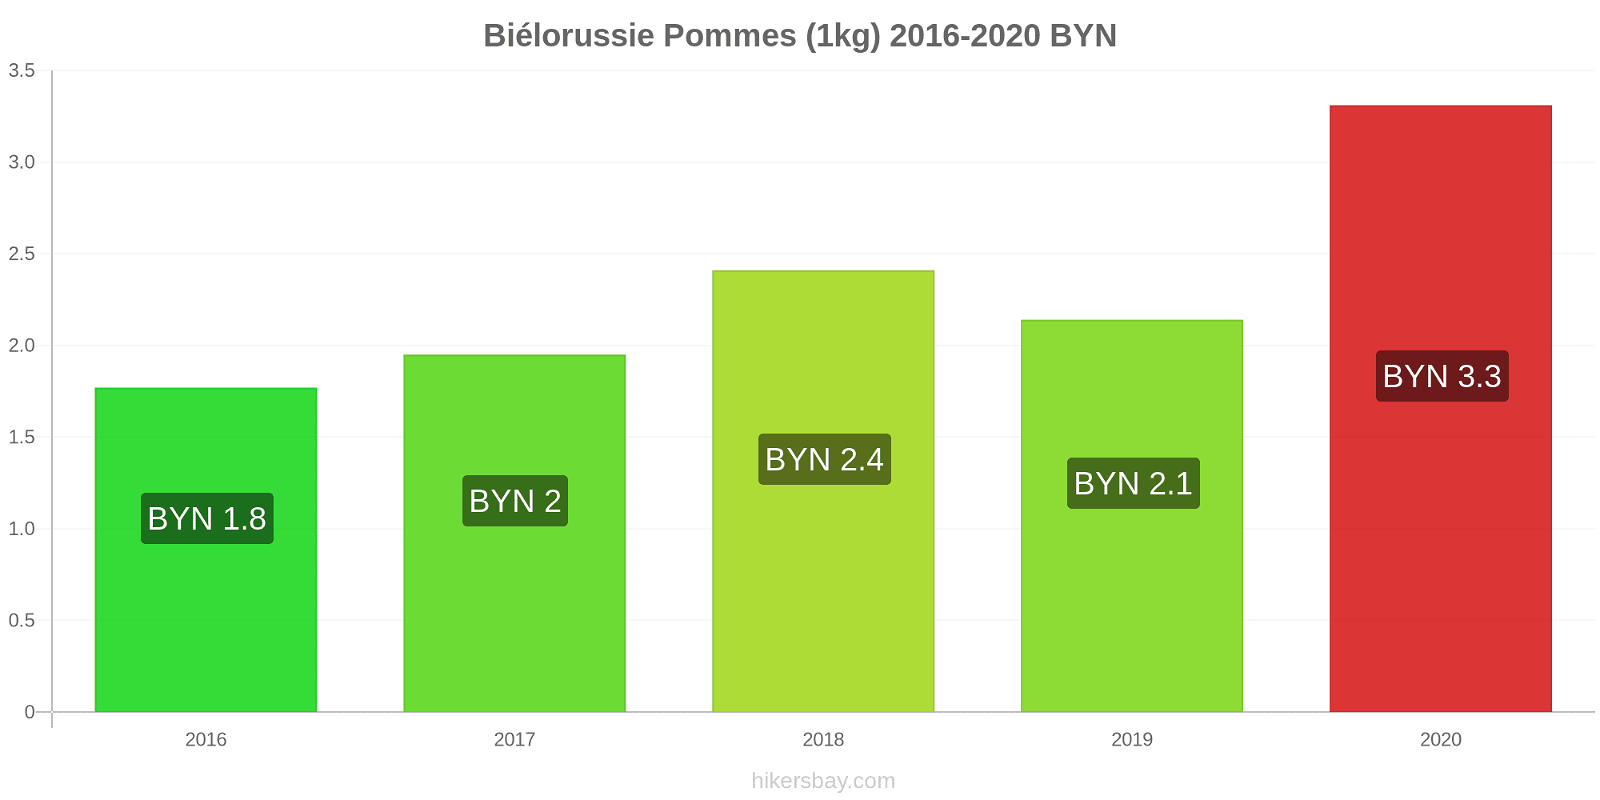 Biélorussie changements de prix Pommes (1kg) hikersbay.com